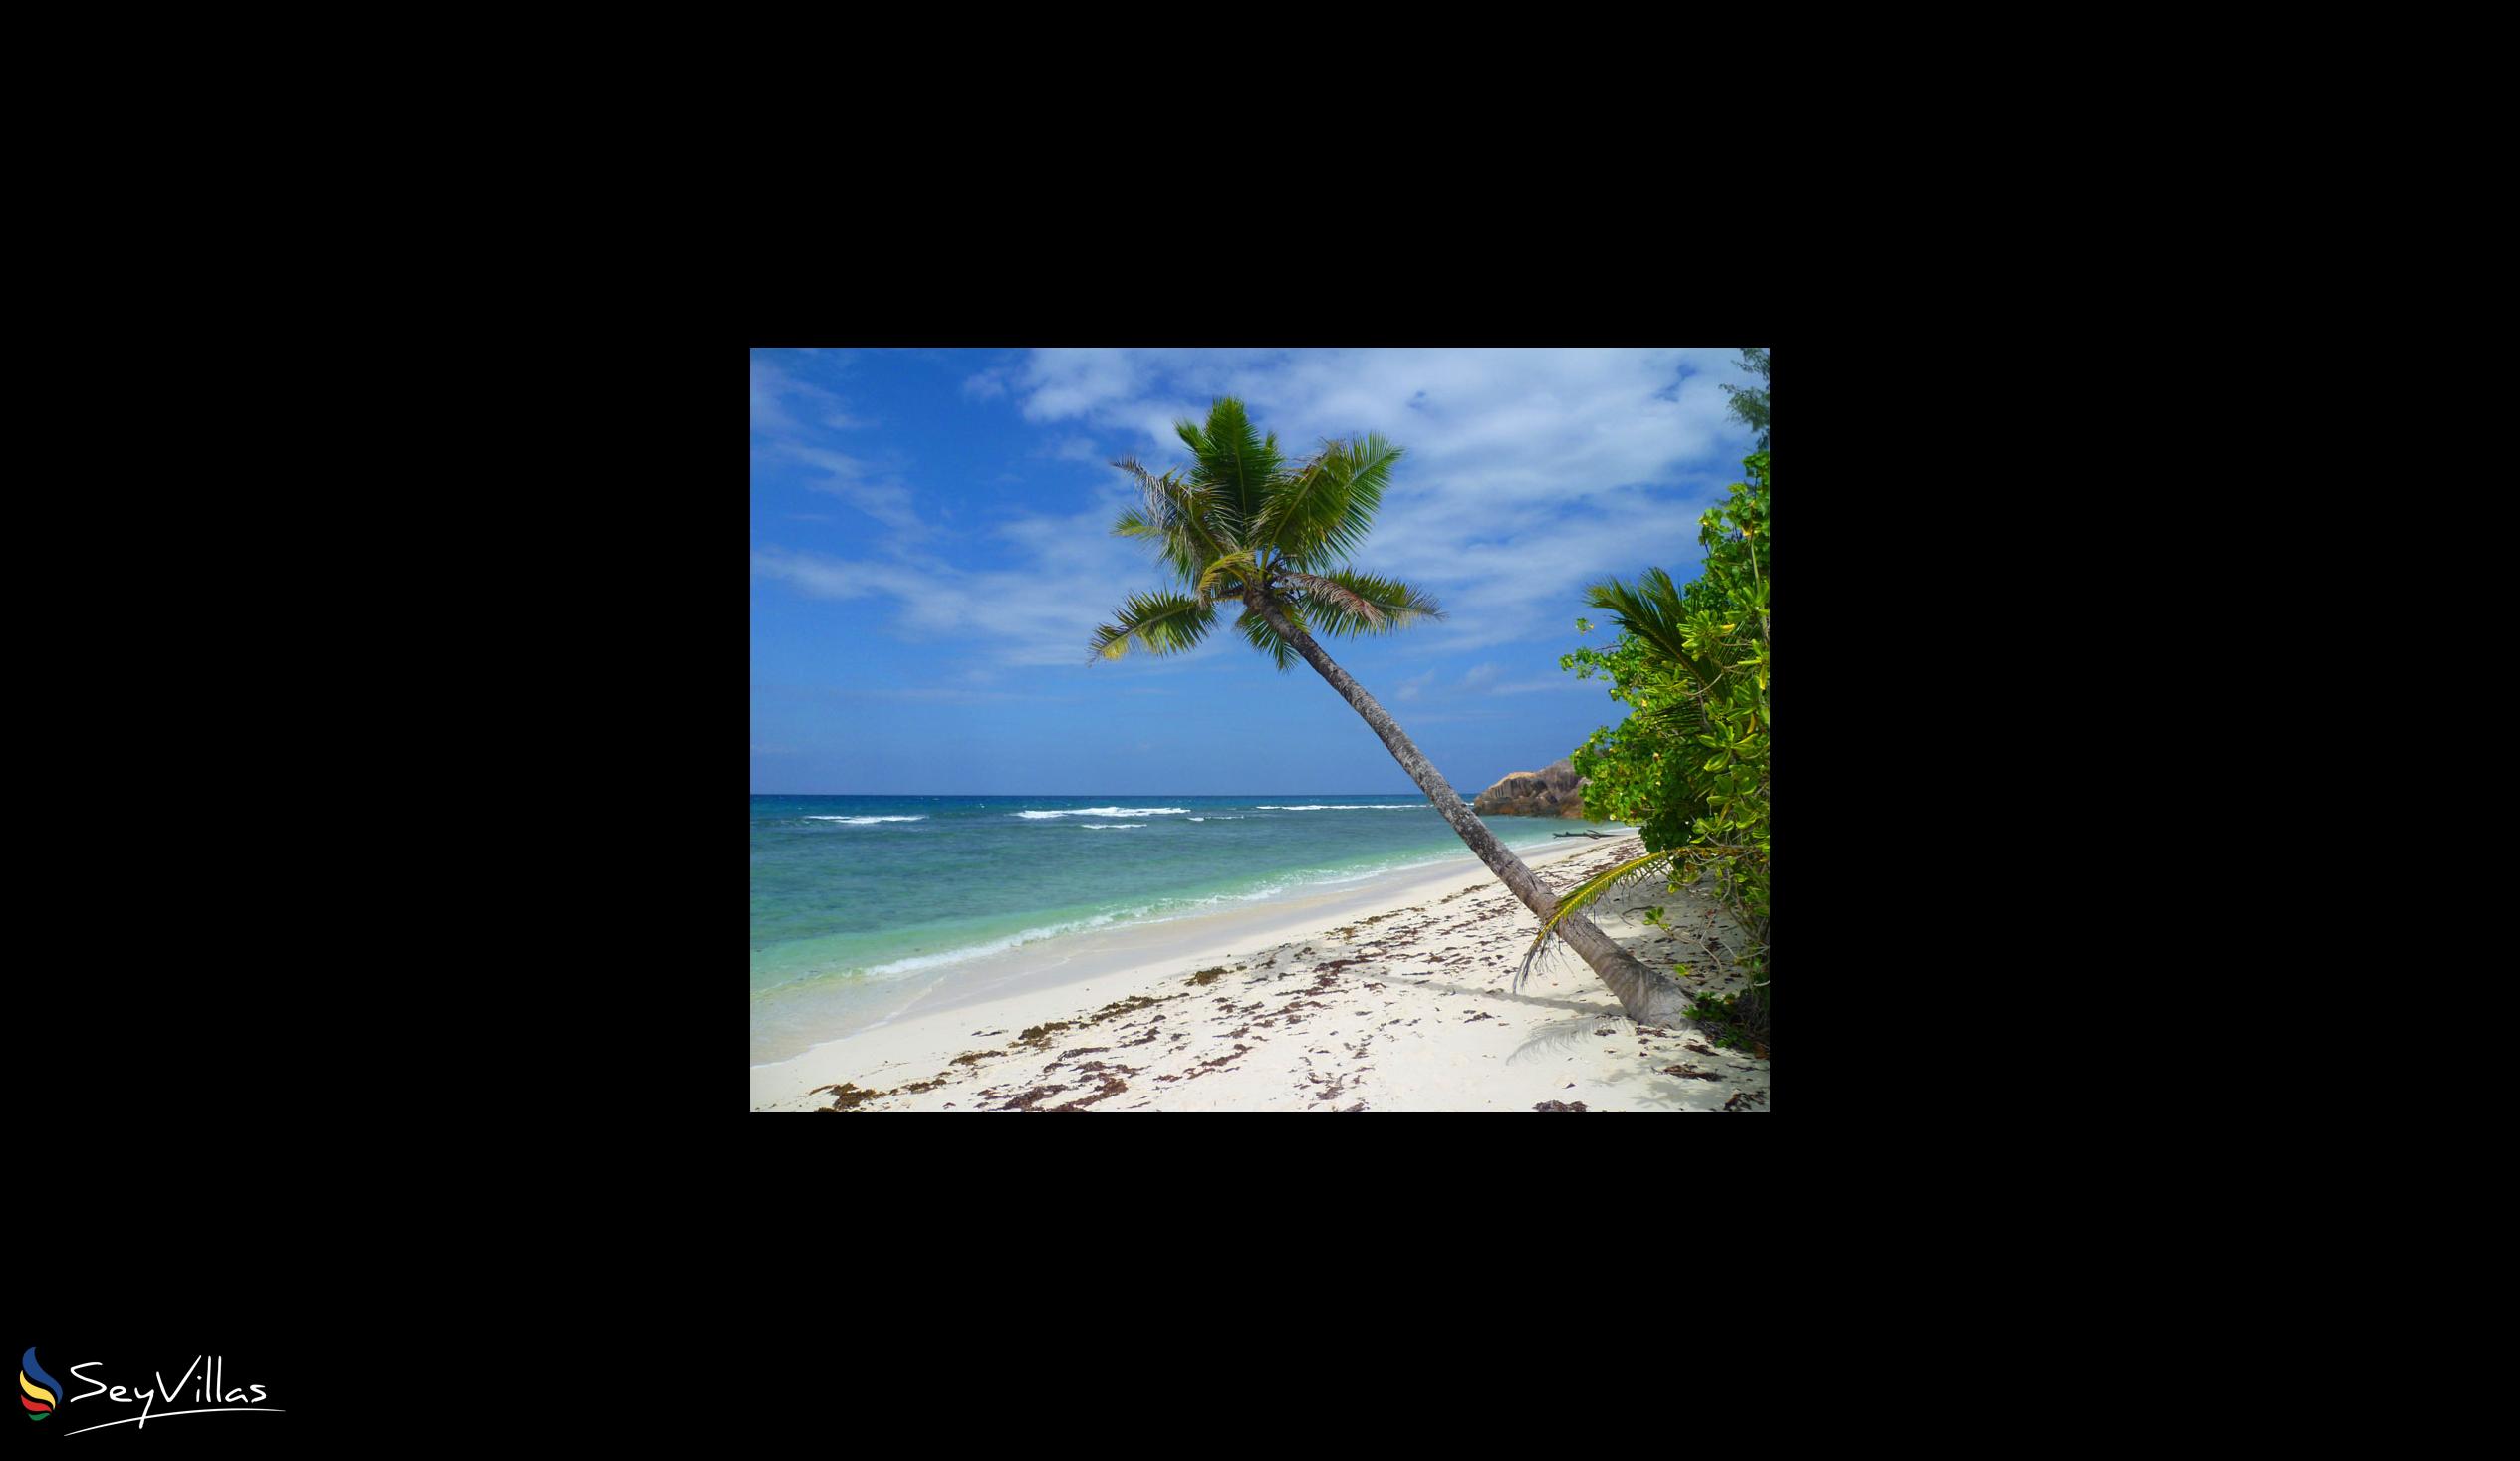 Photo 45: Hide Away - Beaches - Praslin (Seychelles)